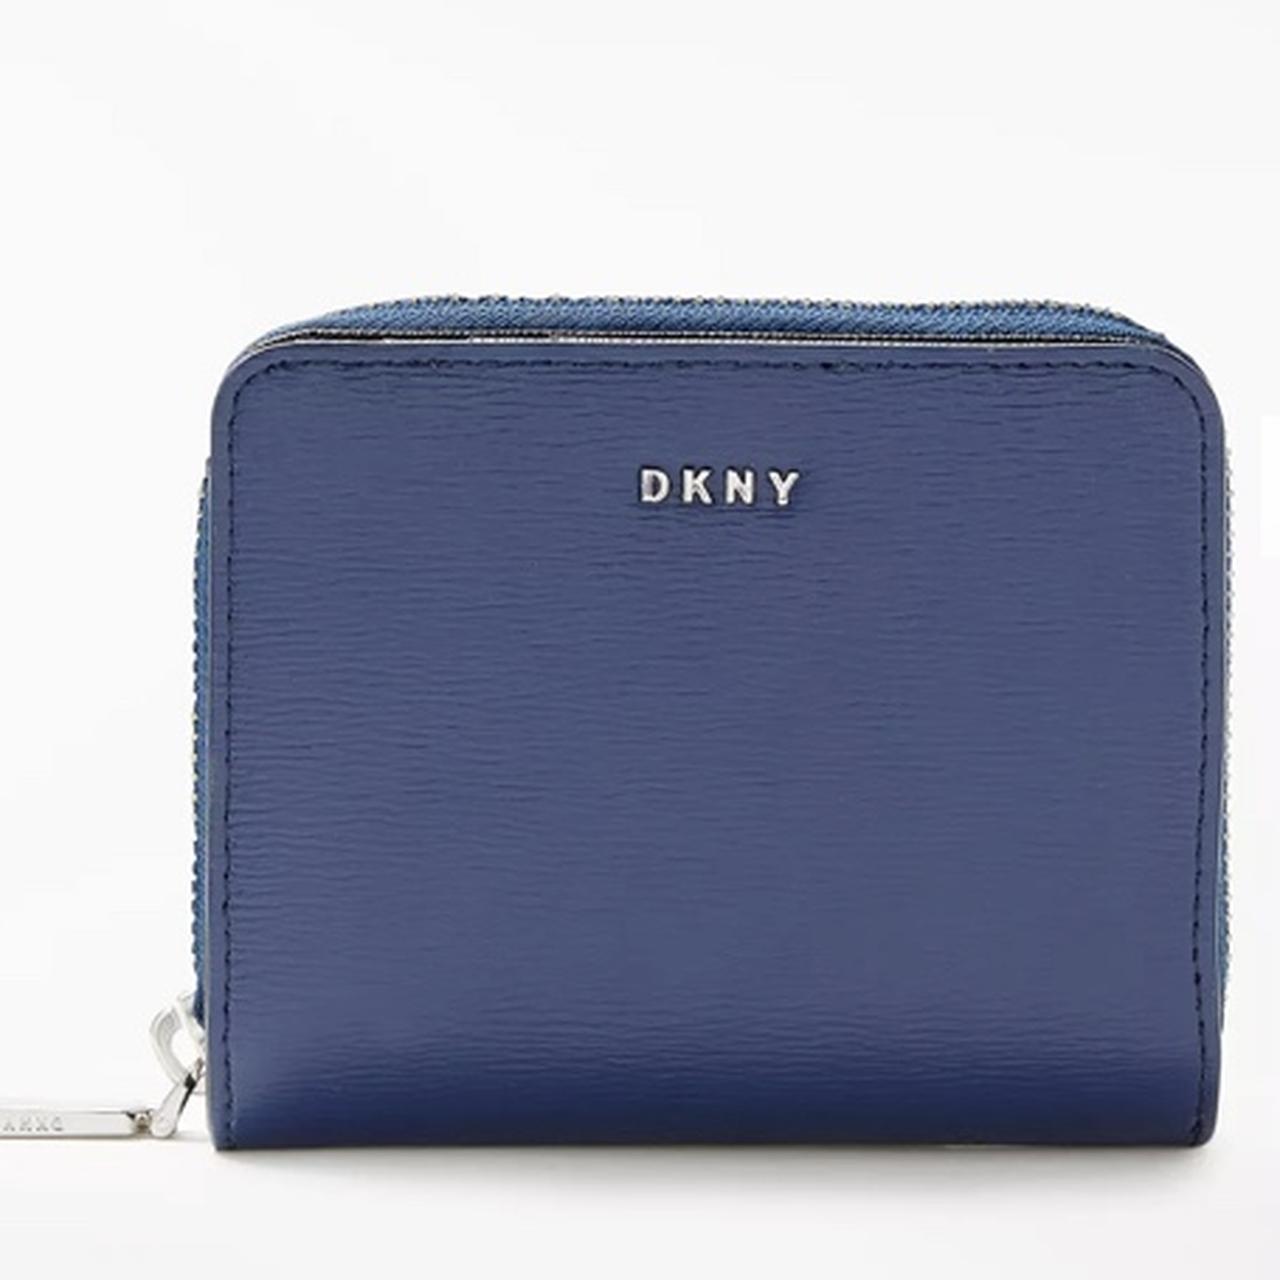 Dkny Bryant Park Tote Shoulder Purse Handbag Large Cream/blue Reg - DKNY  bag - | Fash Brands